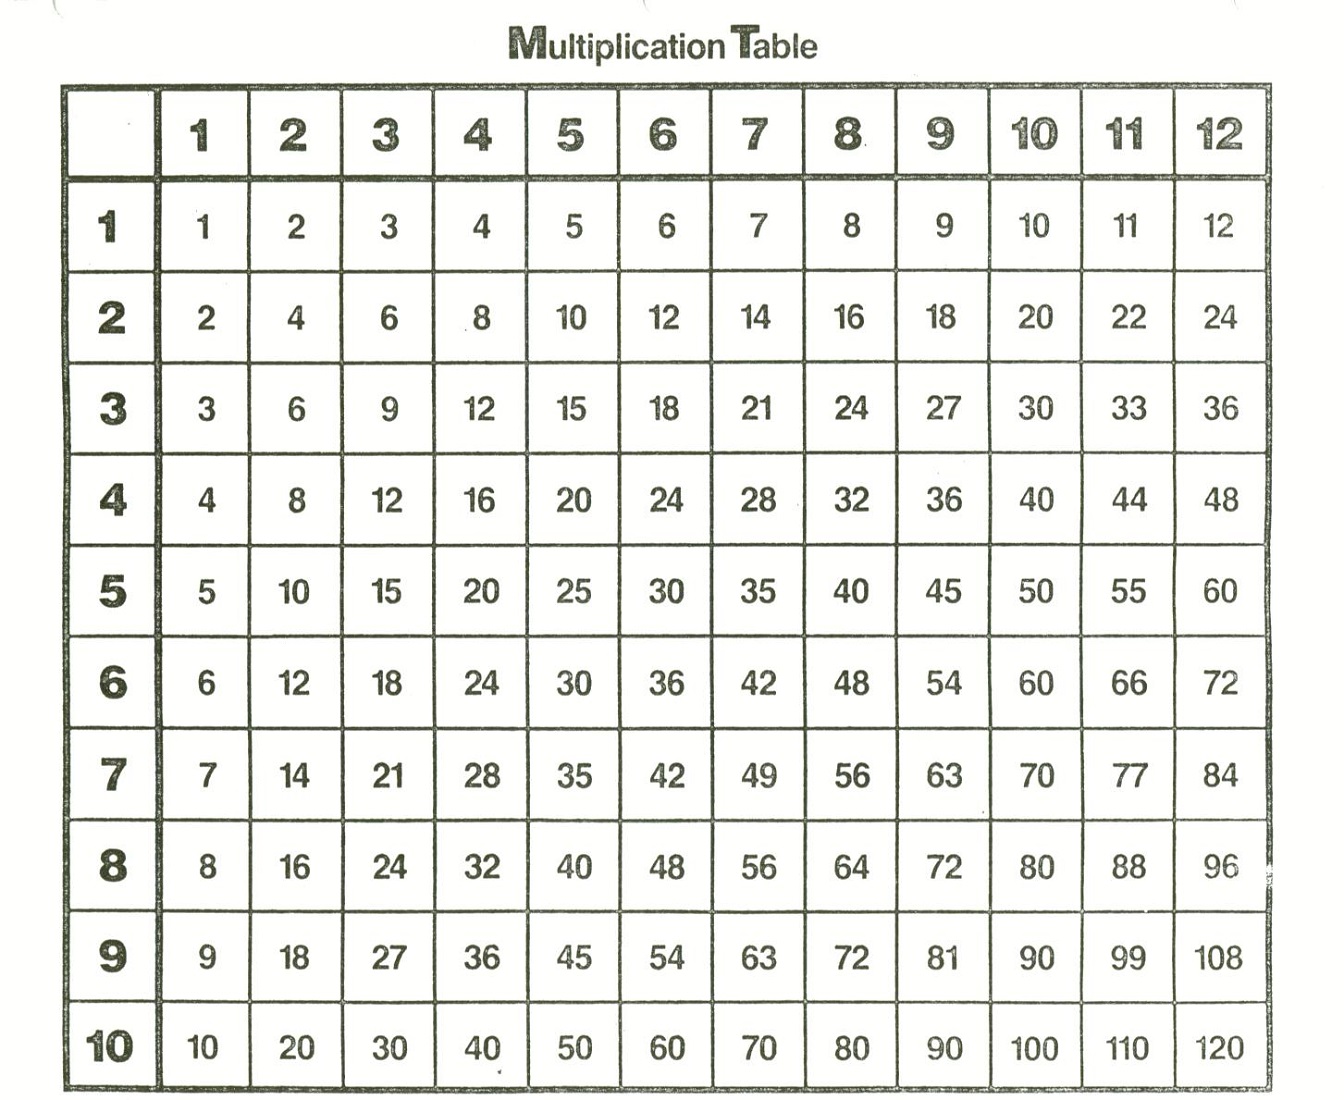 Worksheet #612792: Multiplication Times Tables Worksheets  worksheets for teachers, multiplication, learning, printable worksheets, and math worksheets Multiplication Table Worksheets 1 12 1100 x 1344